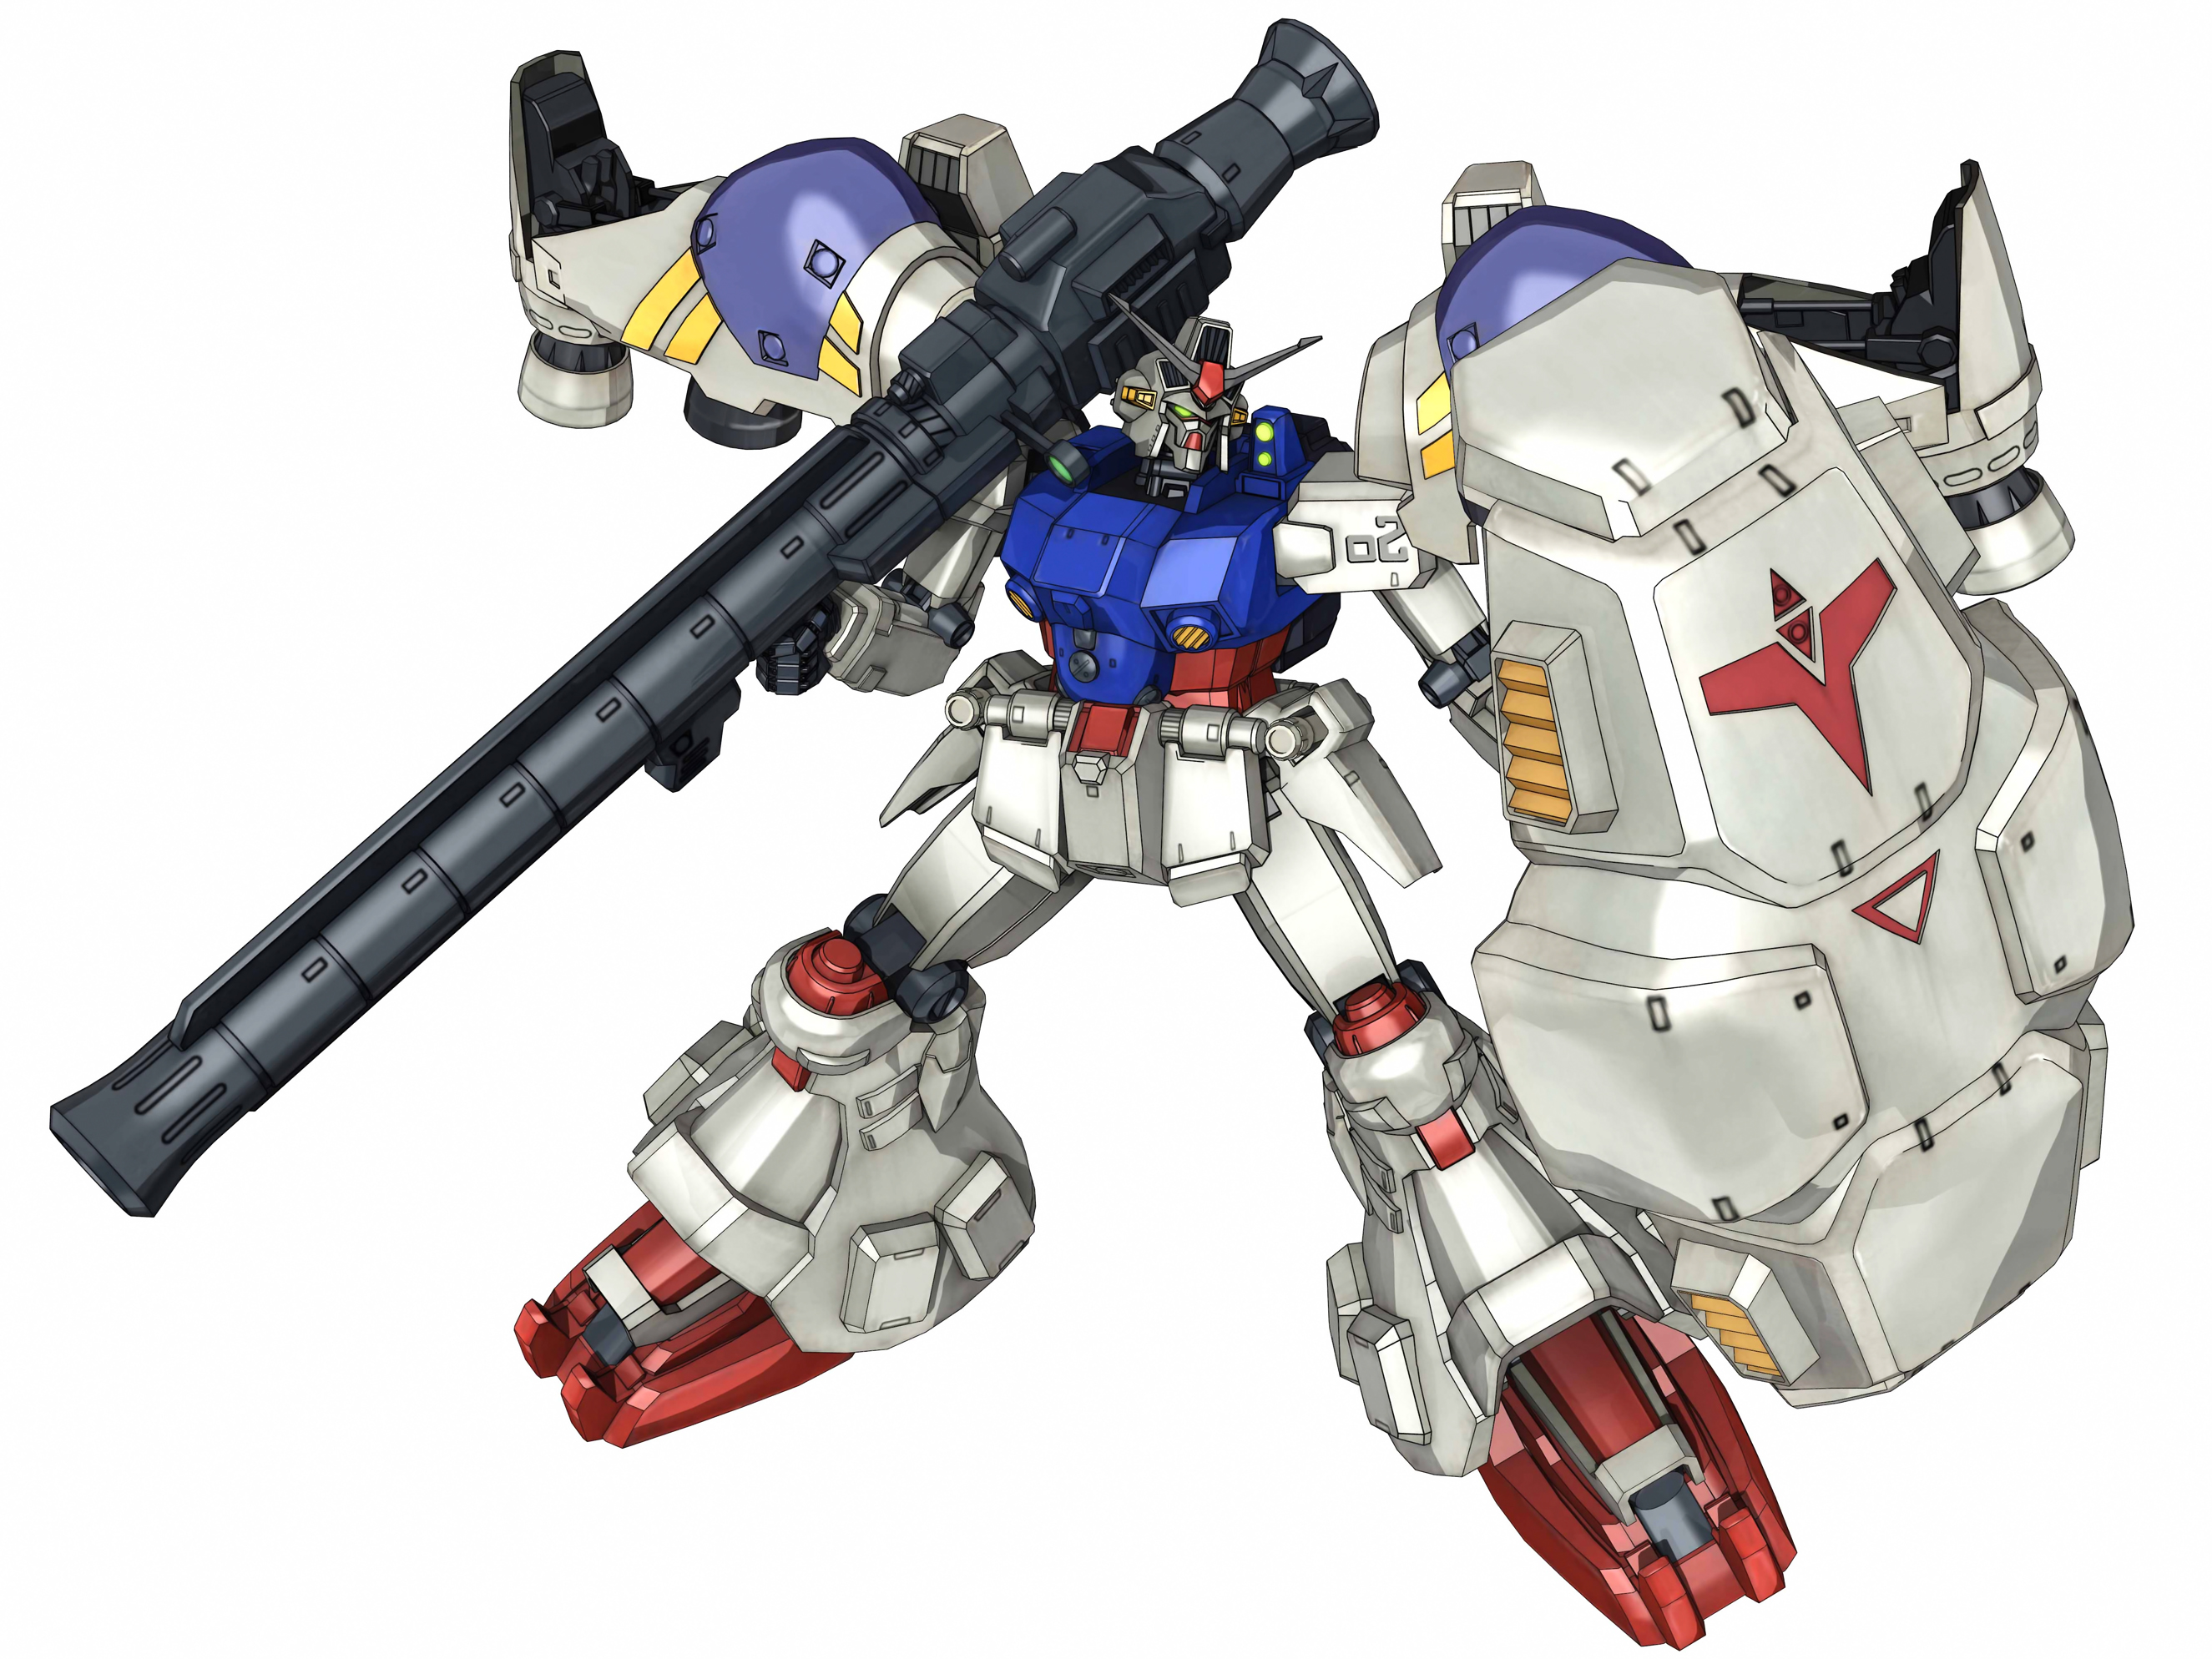 Image   Gundam gp02 dwg3jpg   The Koei Wiki   Dynasty Warriors